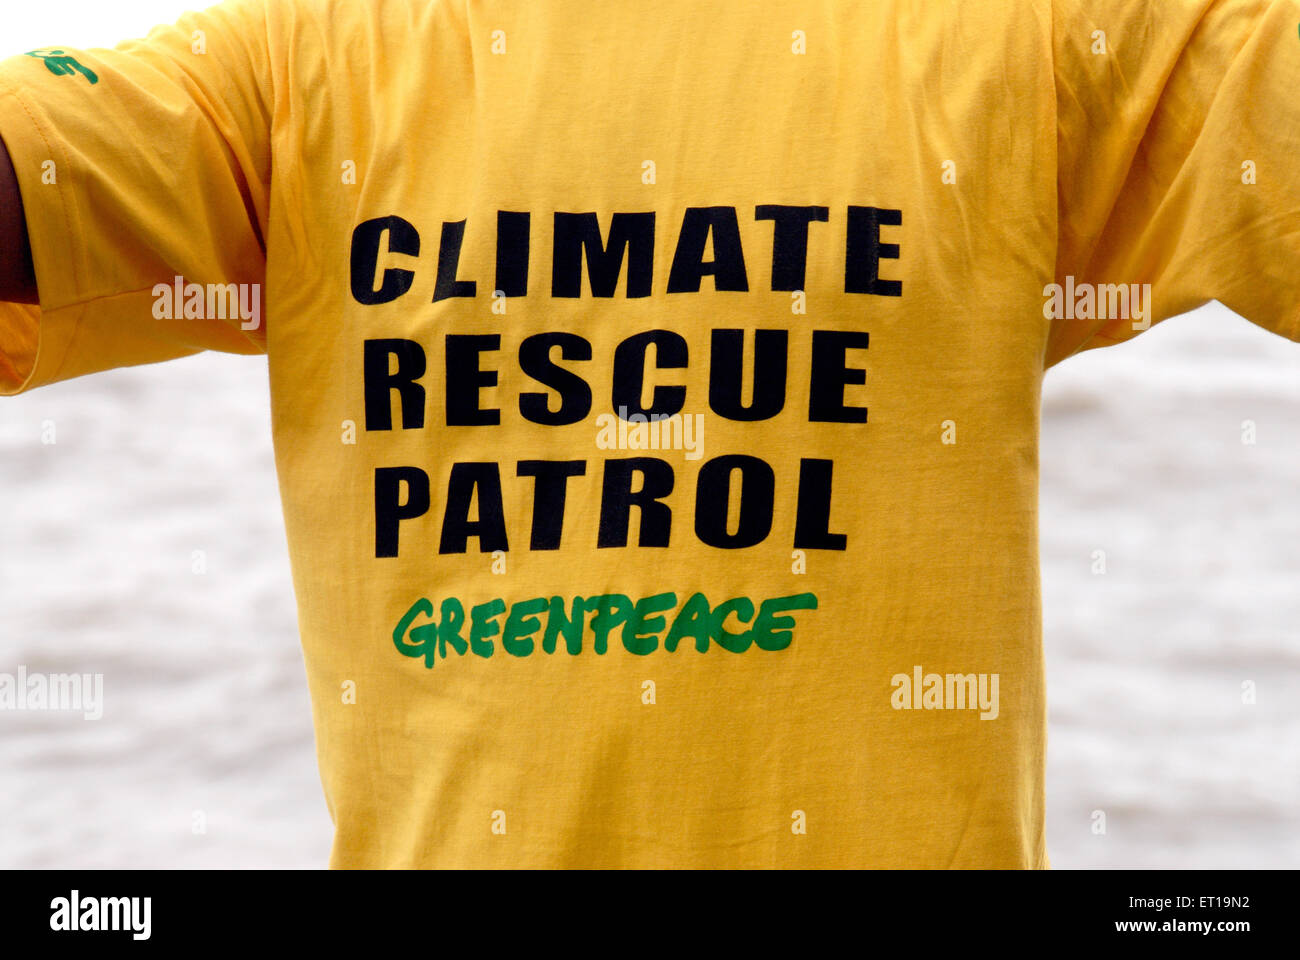 climate rescue patrol greenpeace t shirt Stock Photo